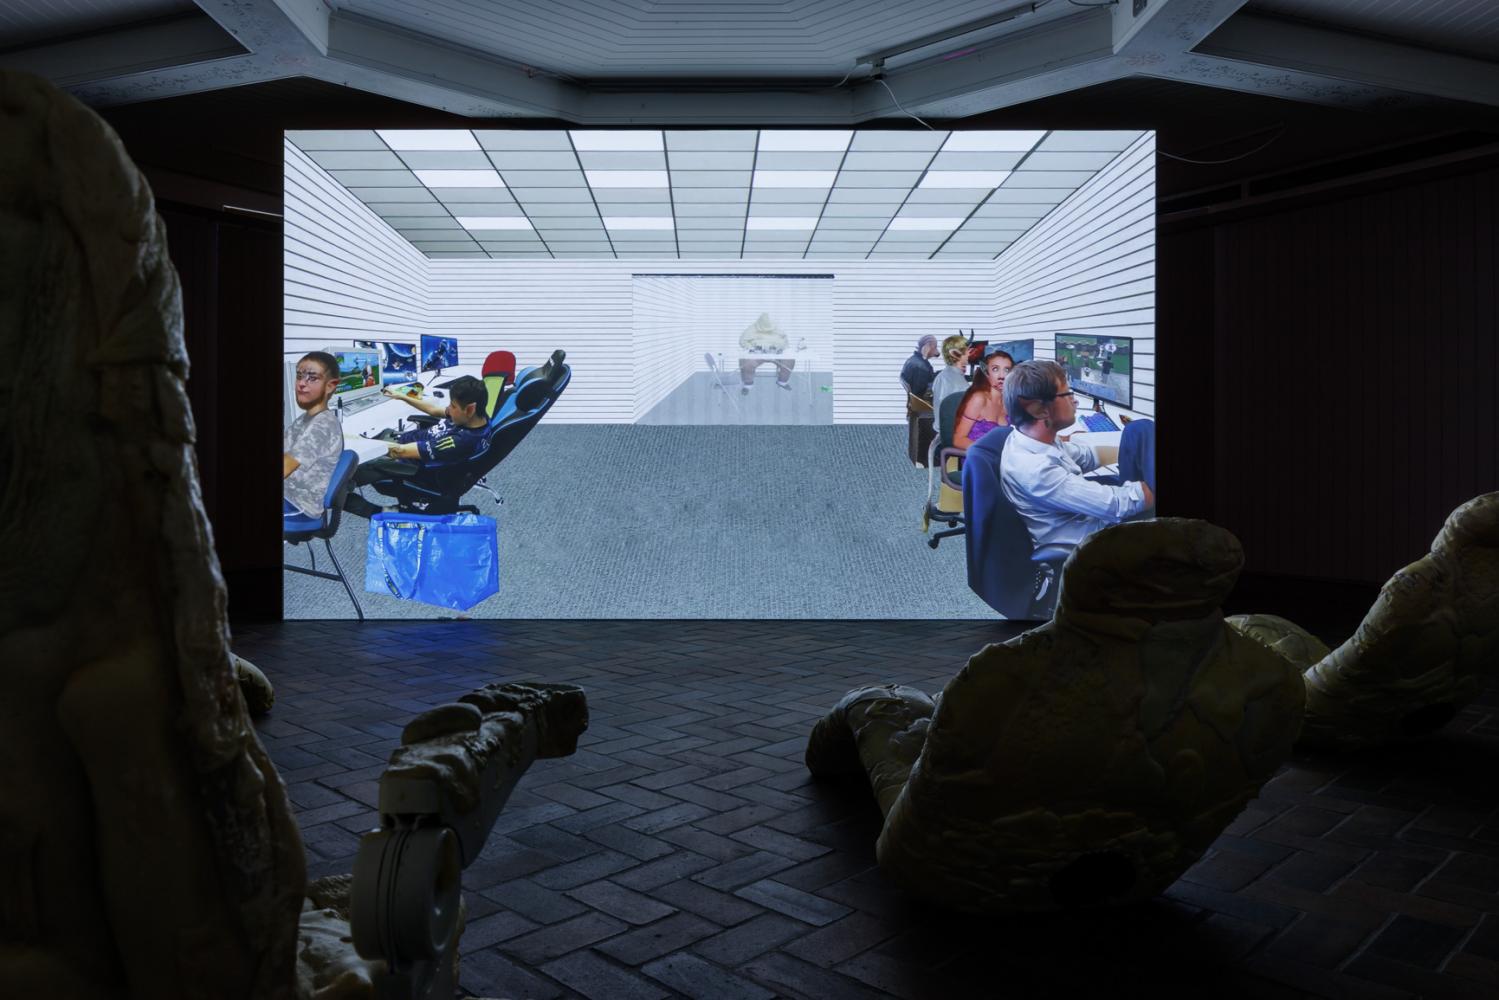 Jon Rafman "Punctured Sky", 2021, Installationsansicht im Schinkel Pavillon, 2022